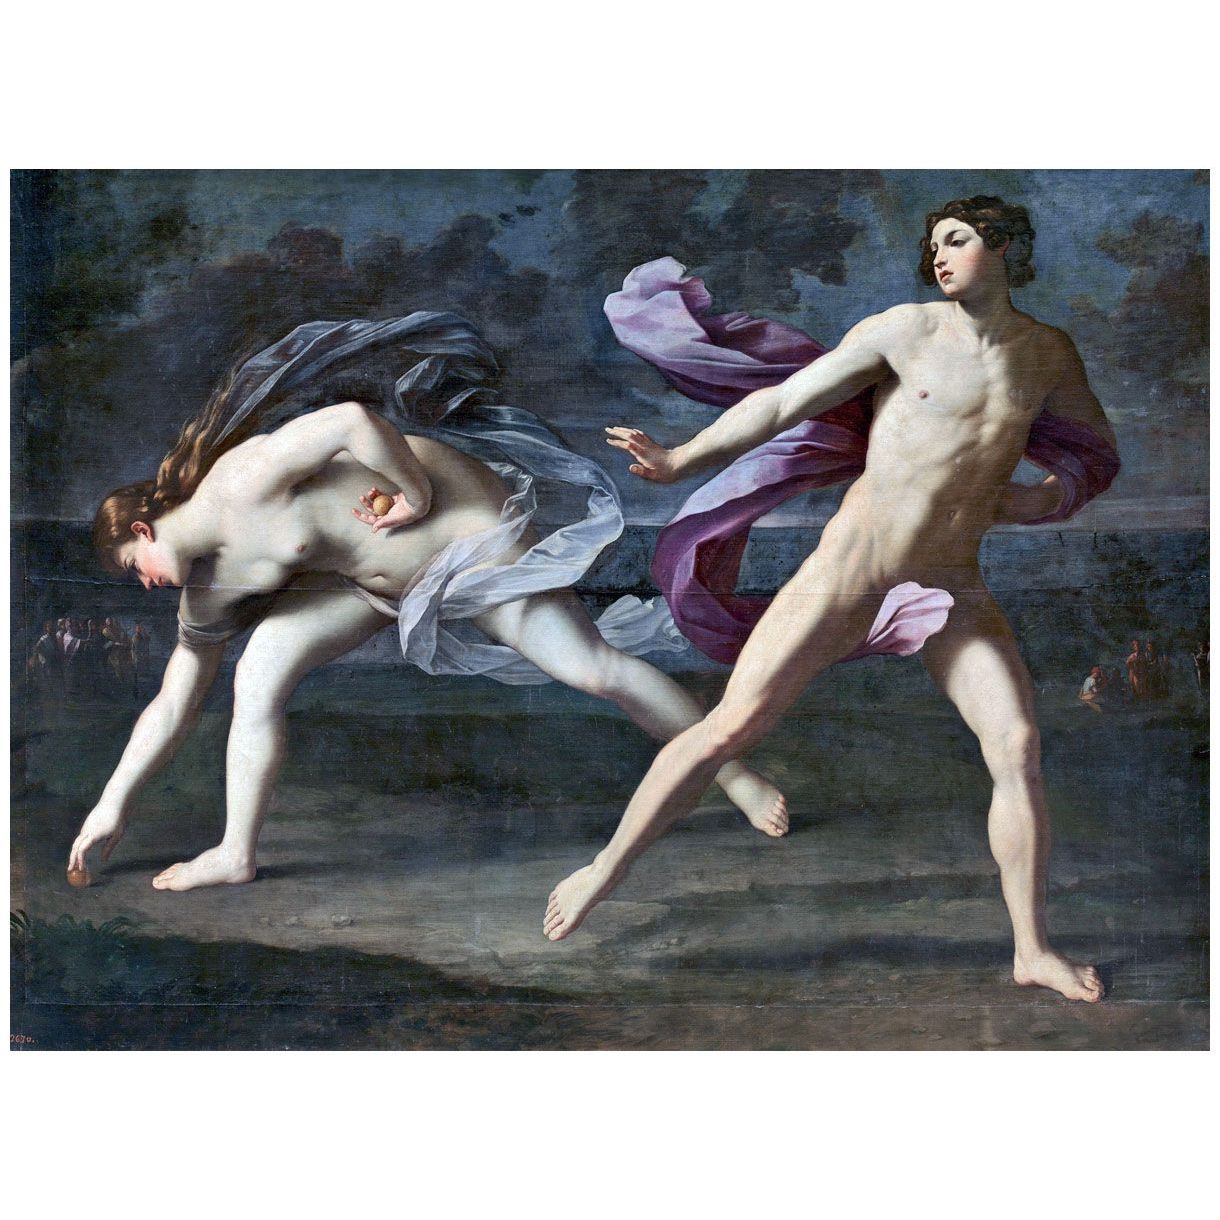 Guido Reni. Hippomenes and Atalanta. 1618-1619. Museo del Prado